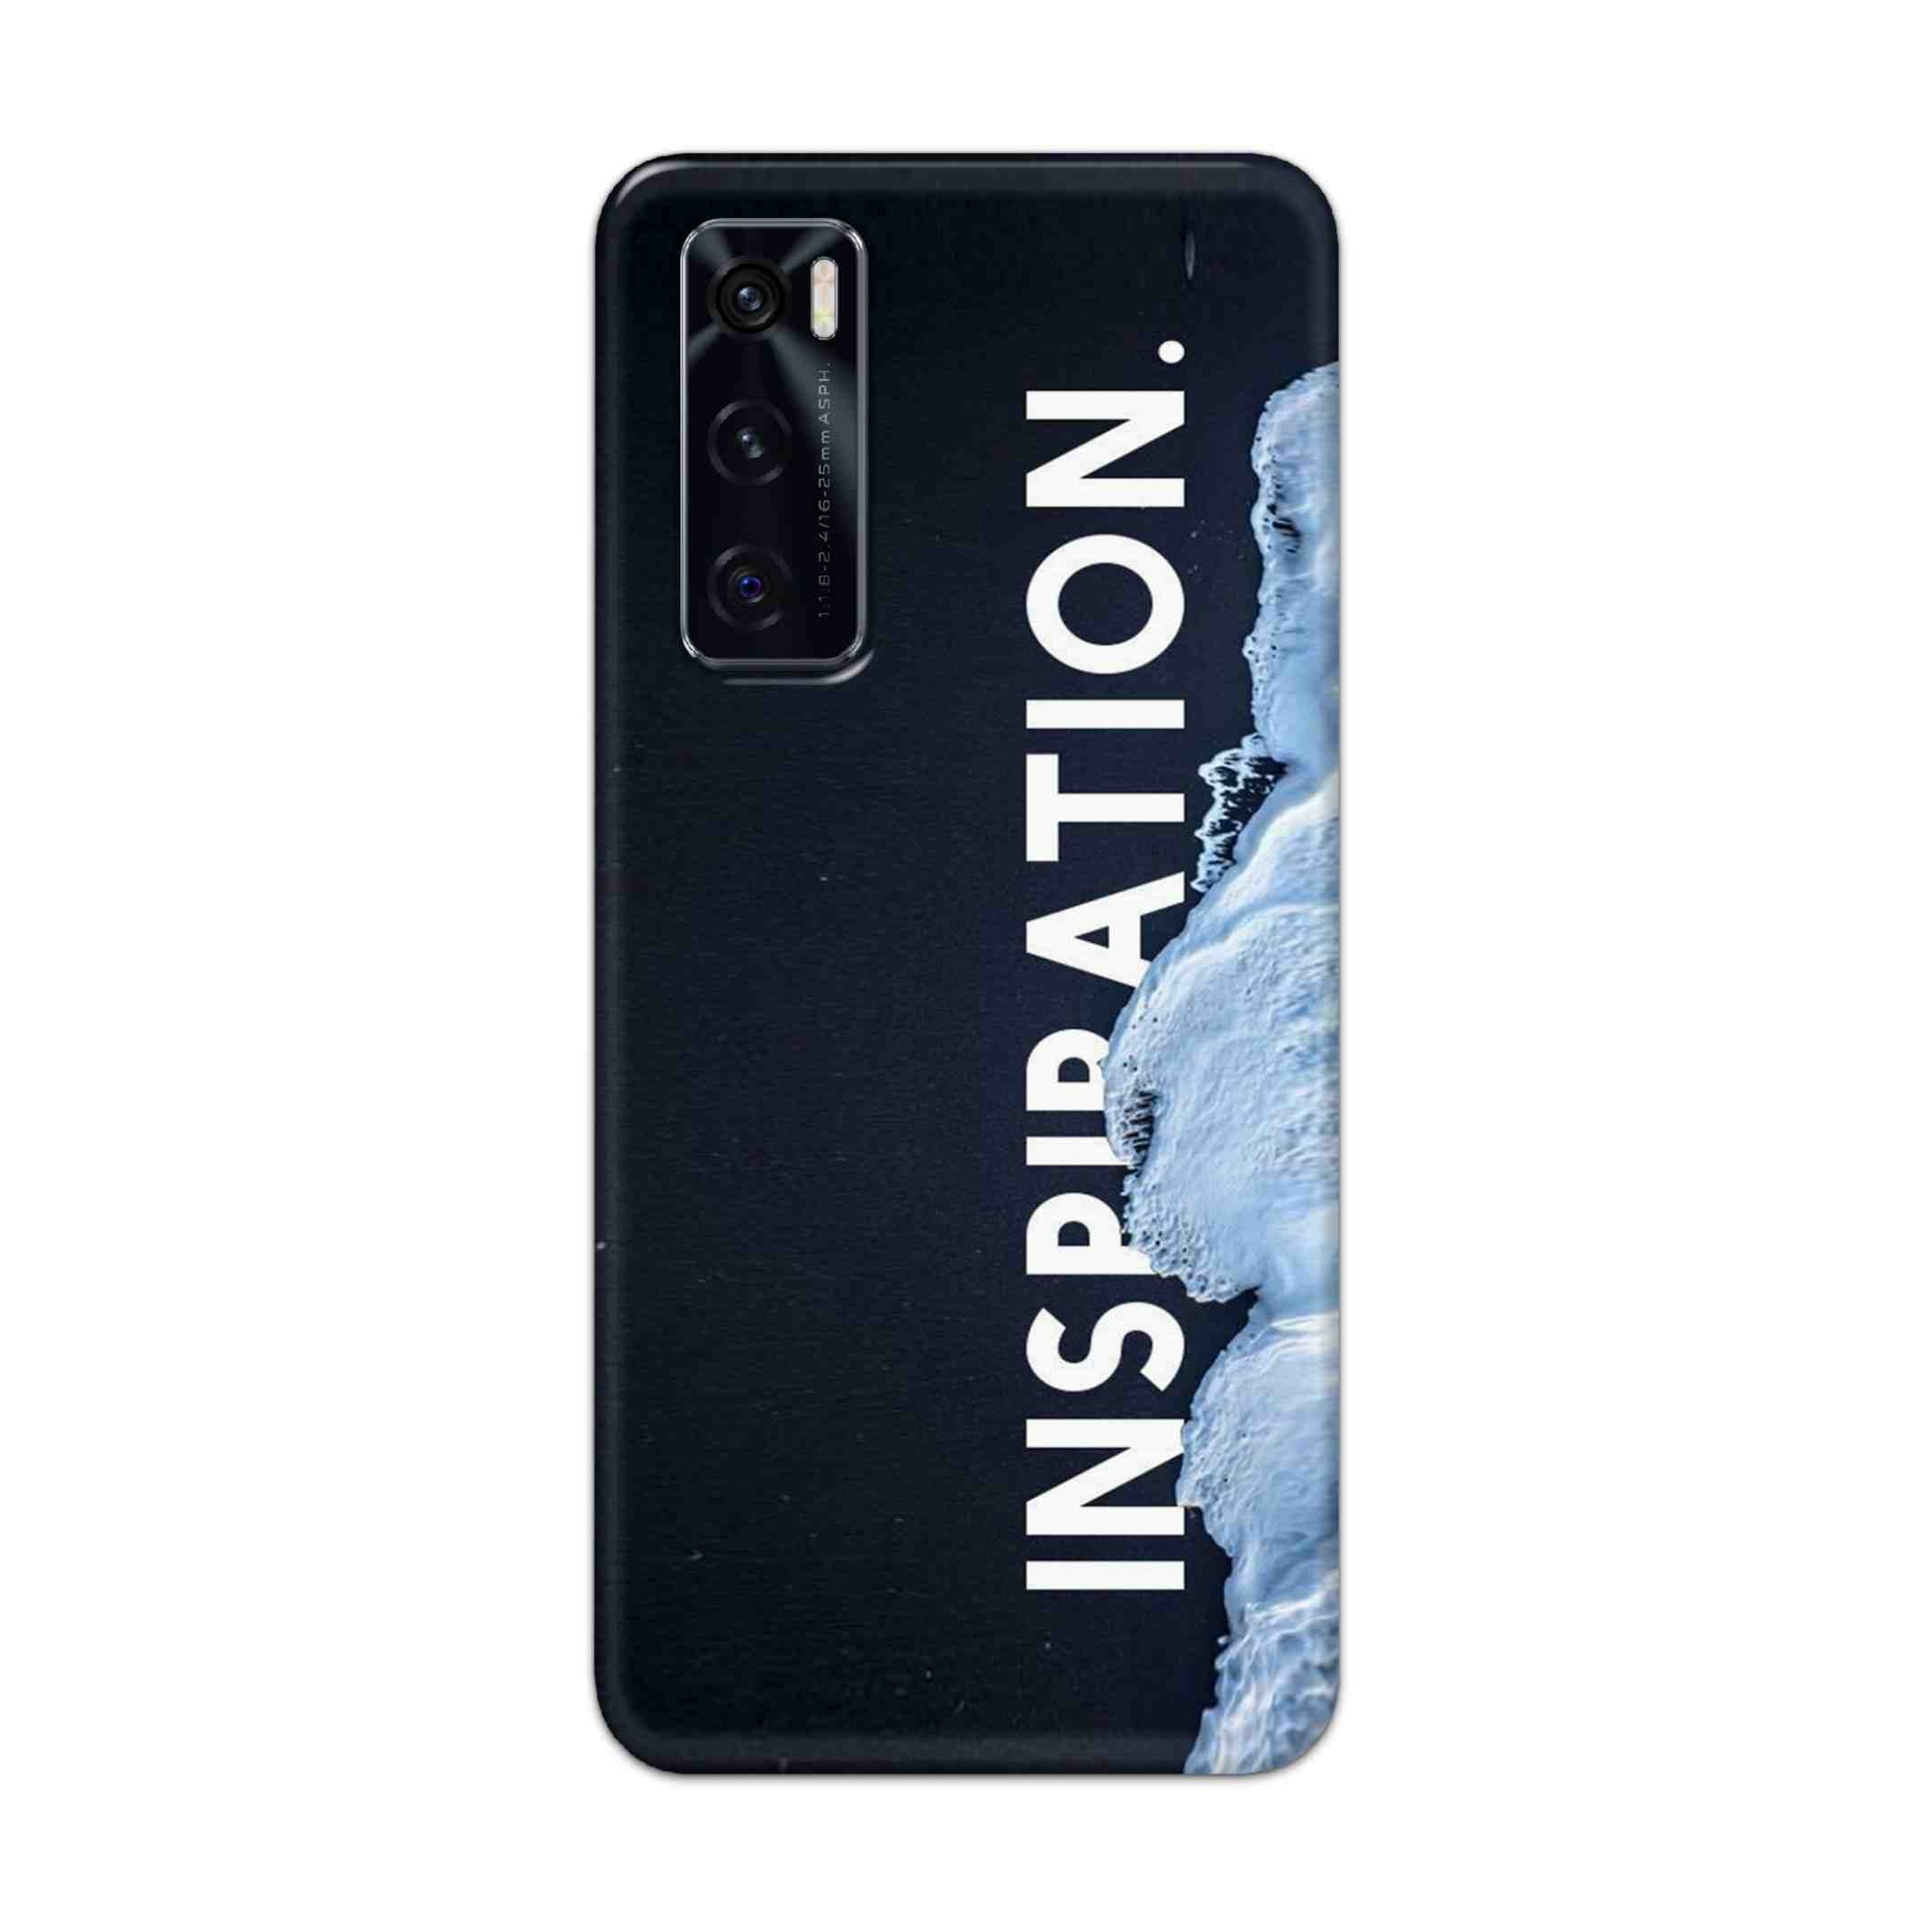 Buy Inspiration Hard Back Mobile Phone Case Cover For Vivo V20 SE Online